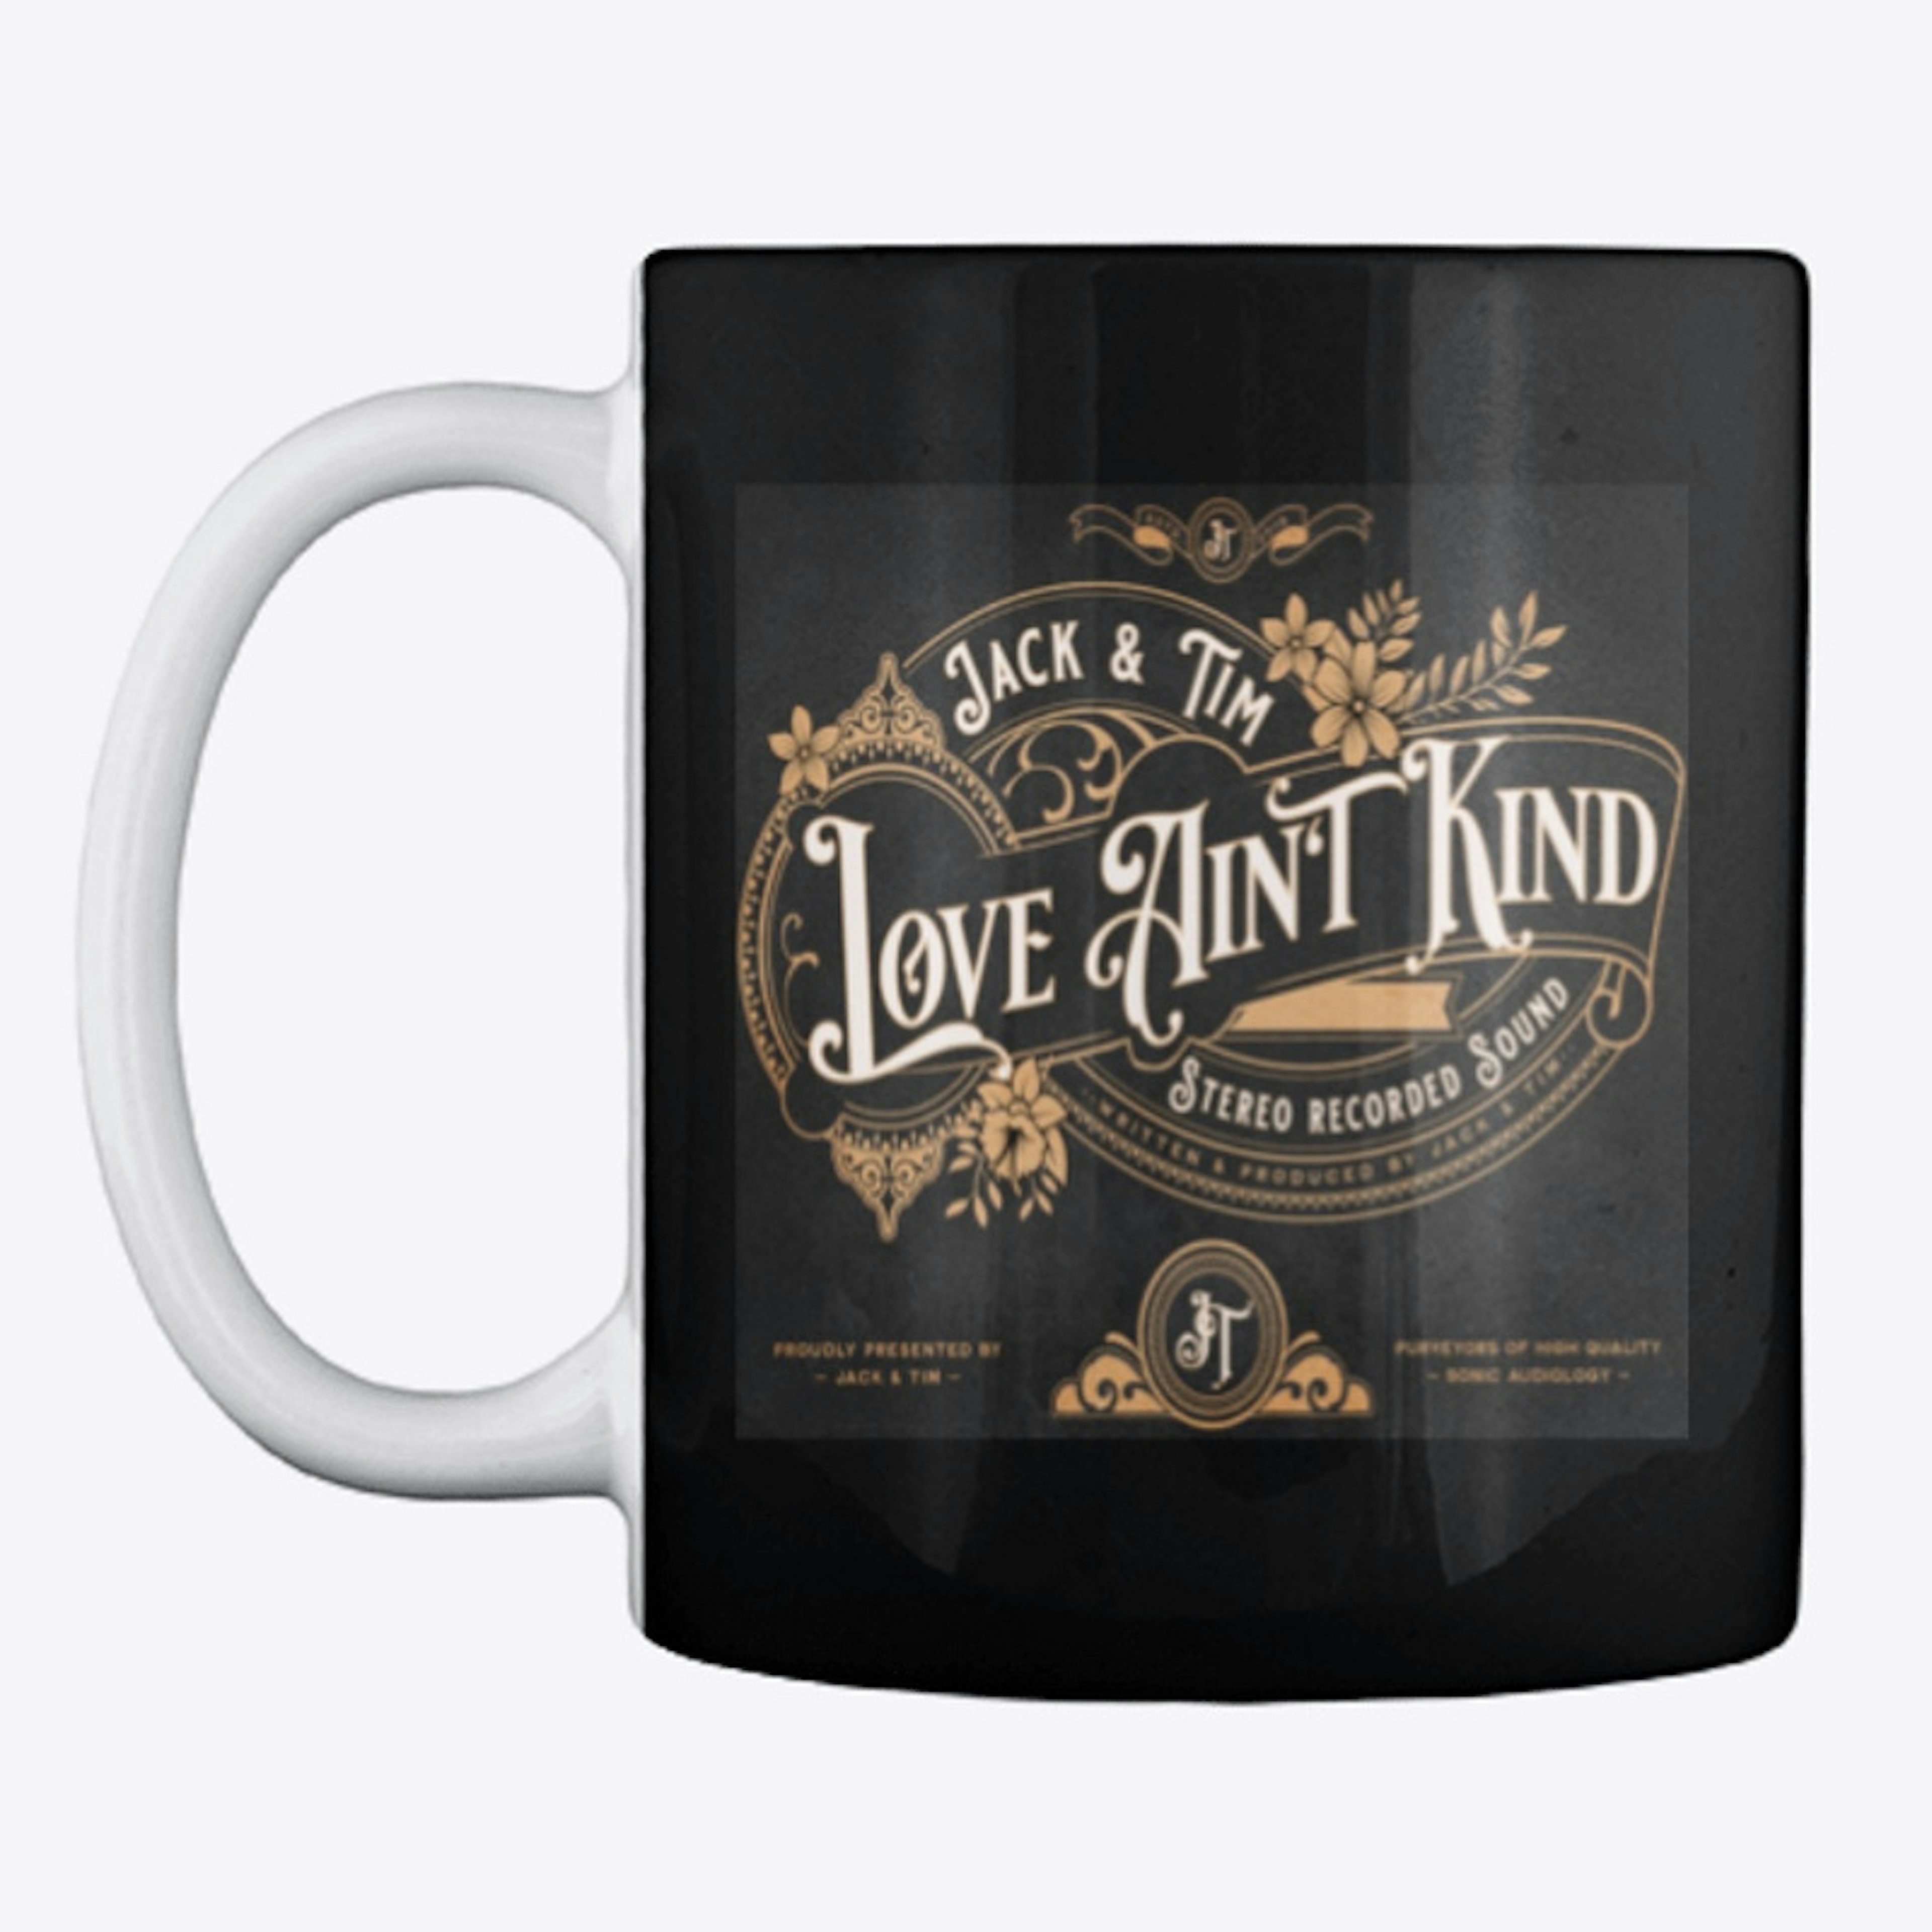 " Love Ain't Kind " Mug